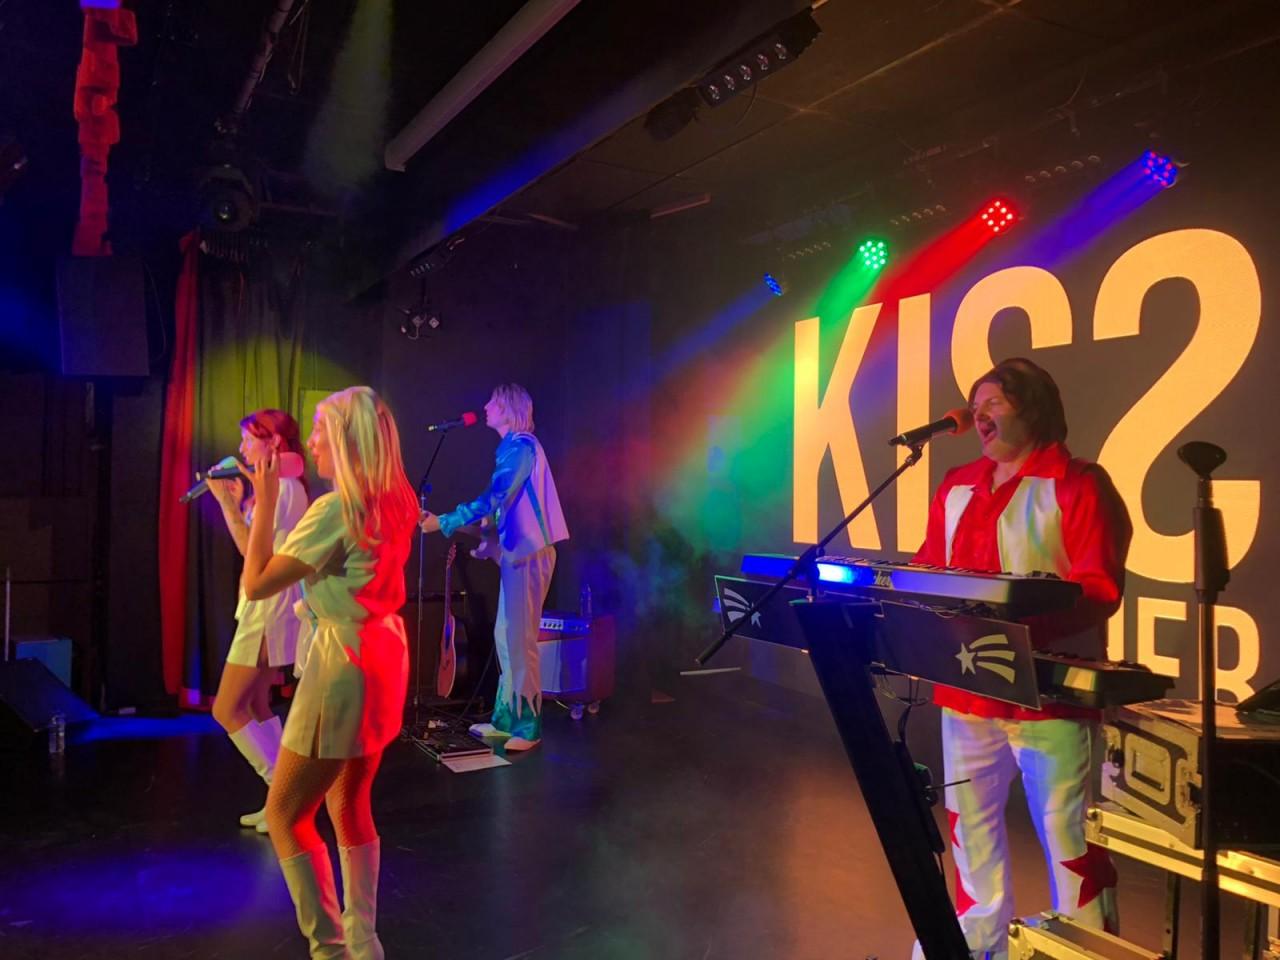 ABBA Tribute Band Kiss The Teacher